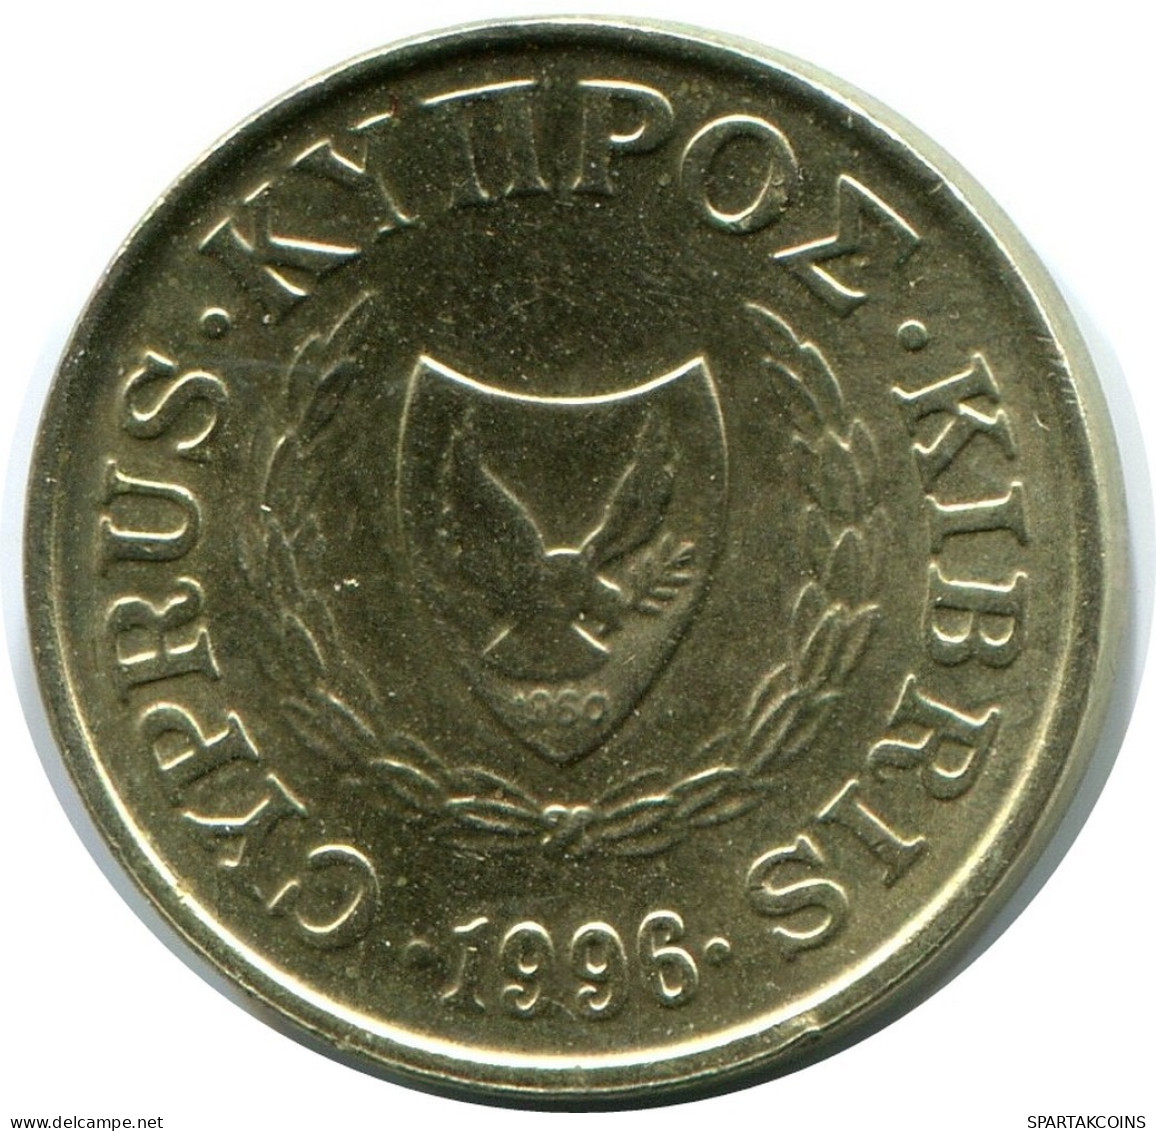 1 CENTS 1996 CYPRUS Coin #AP299.U.A - Cyprus